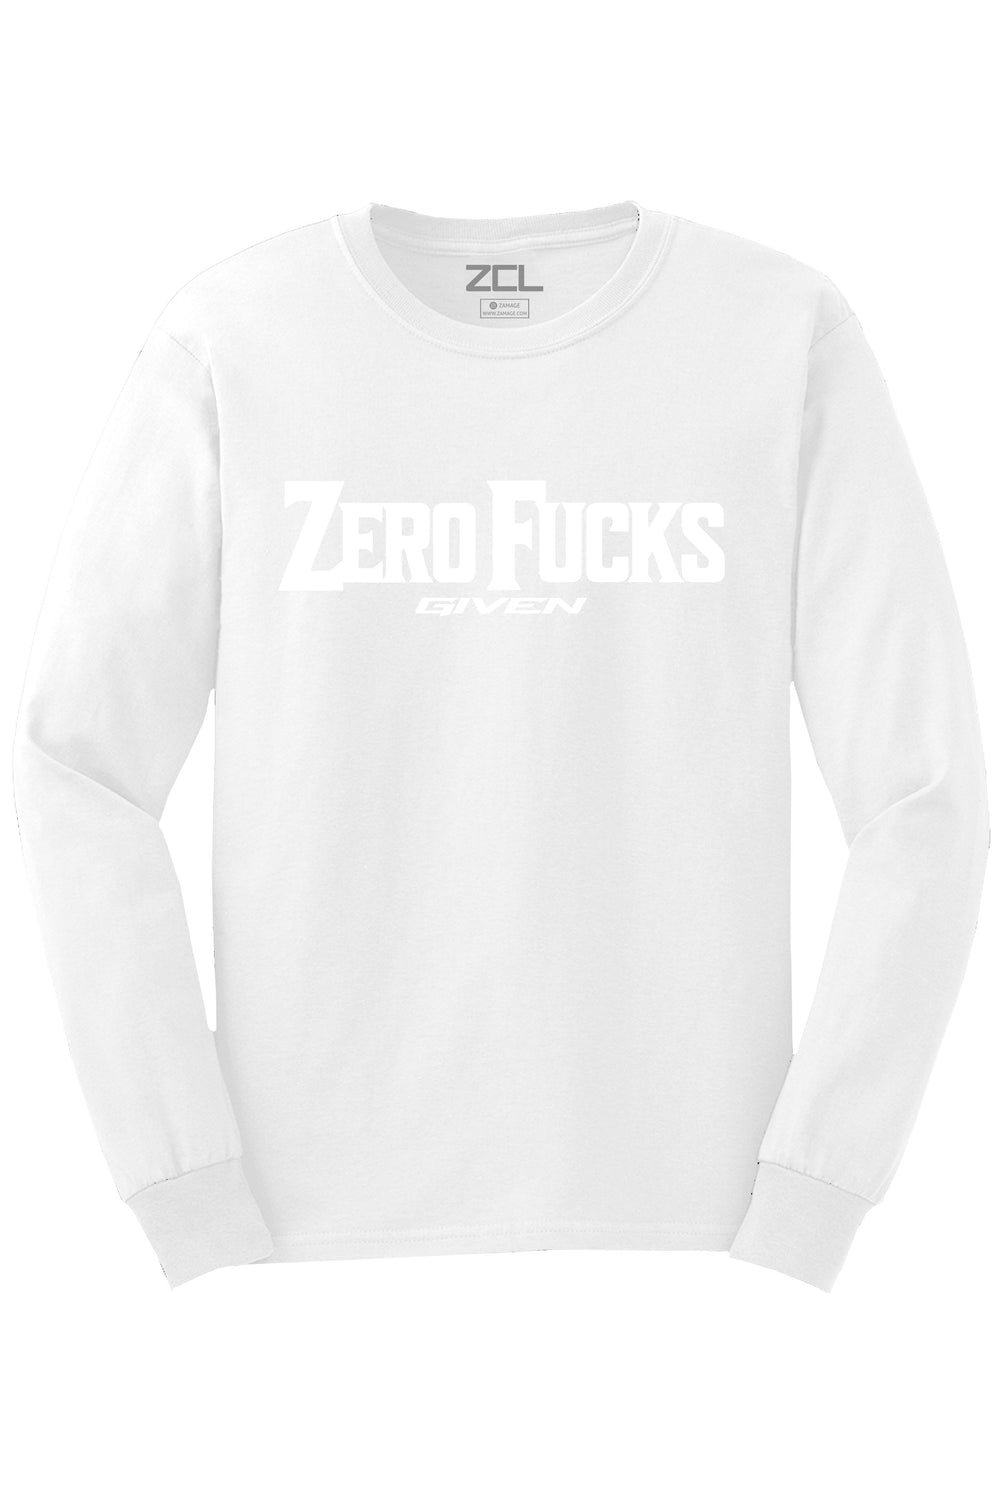 Zero F*cks Long Sleeve Tee (White Logo) - Zamage